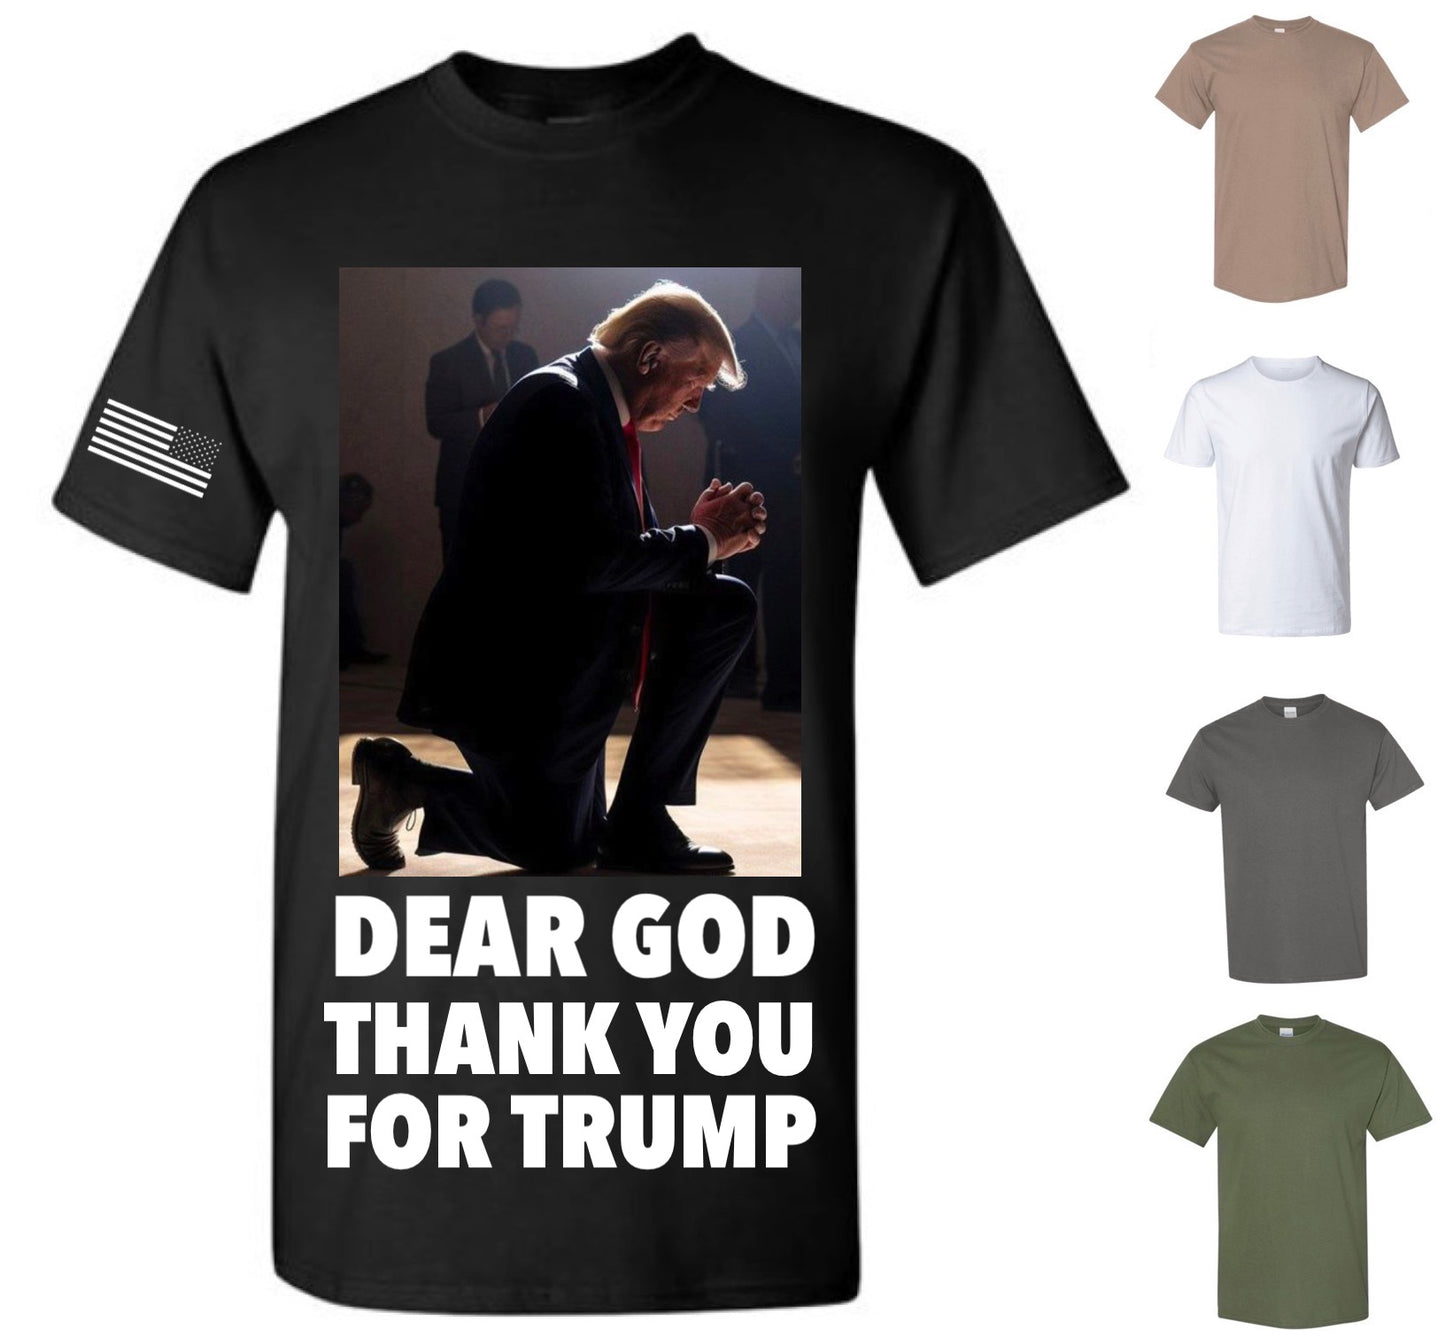 Dear God Thank You For Trump — Free Shipping!